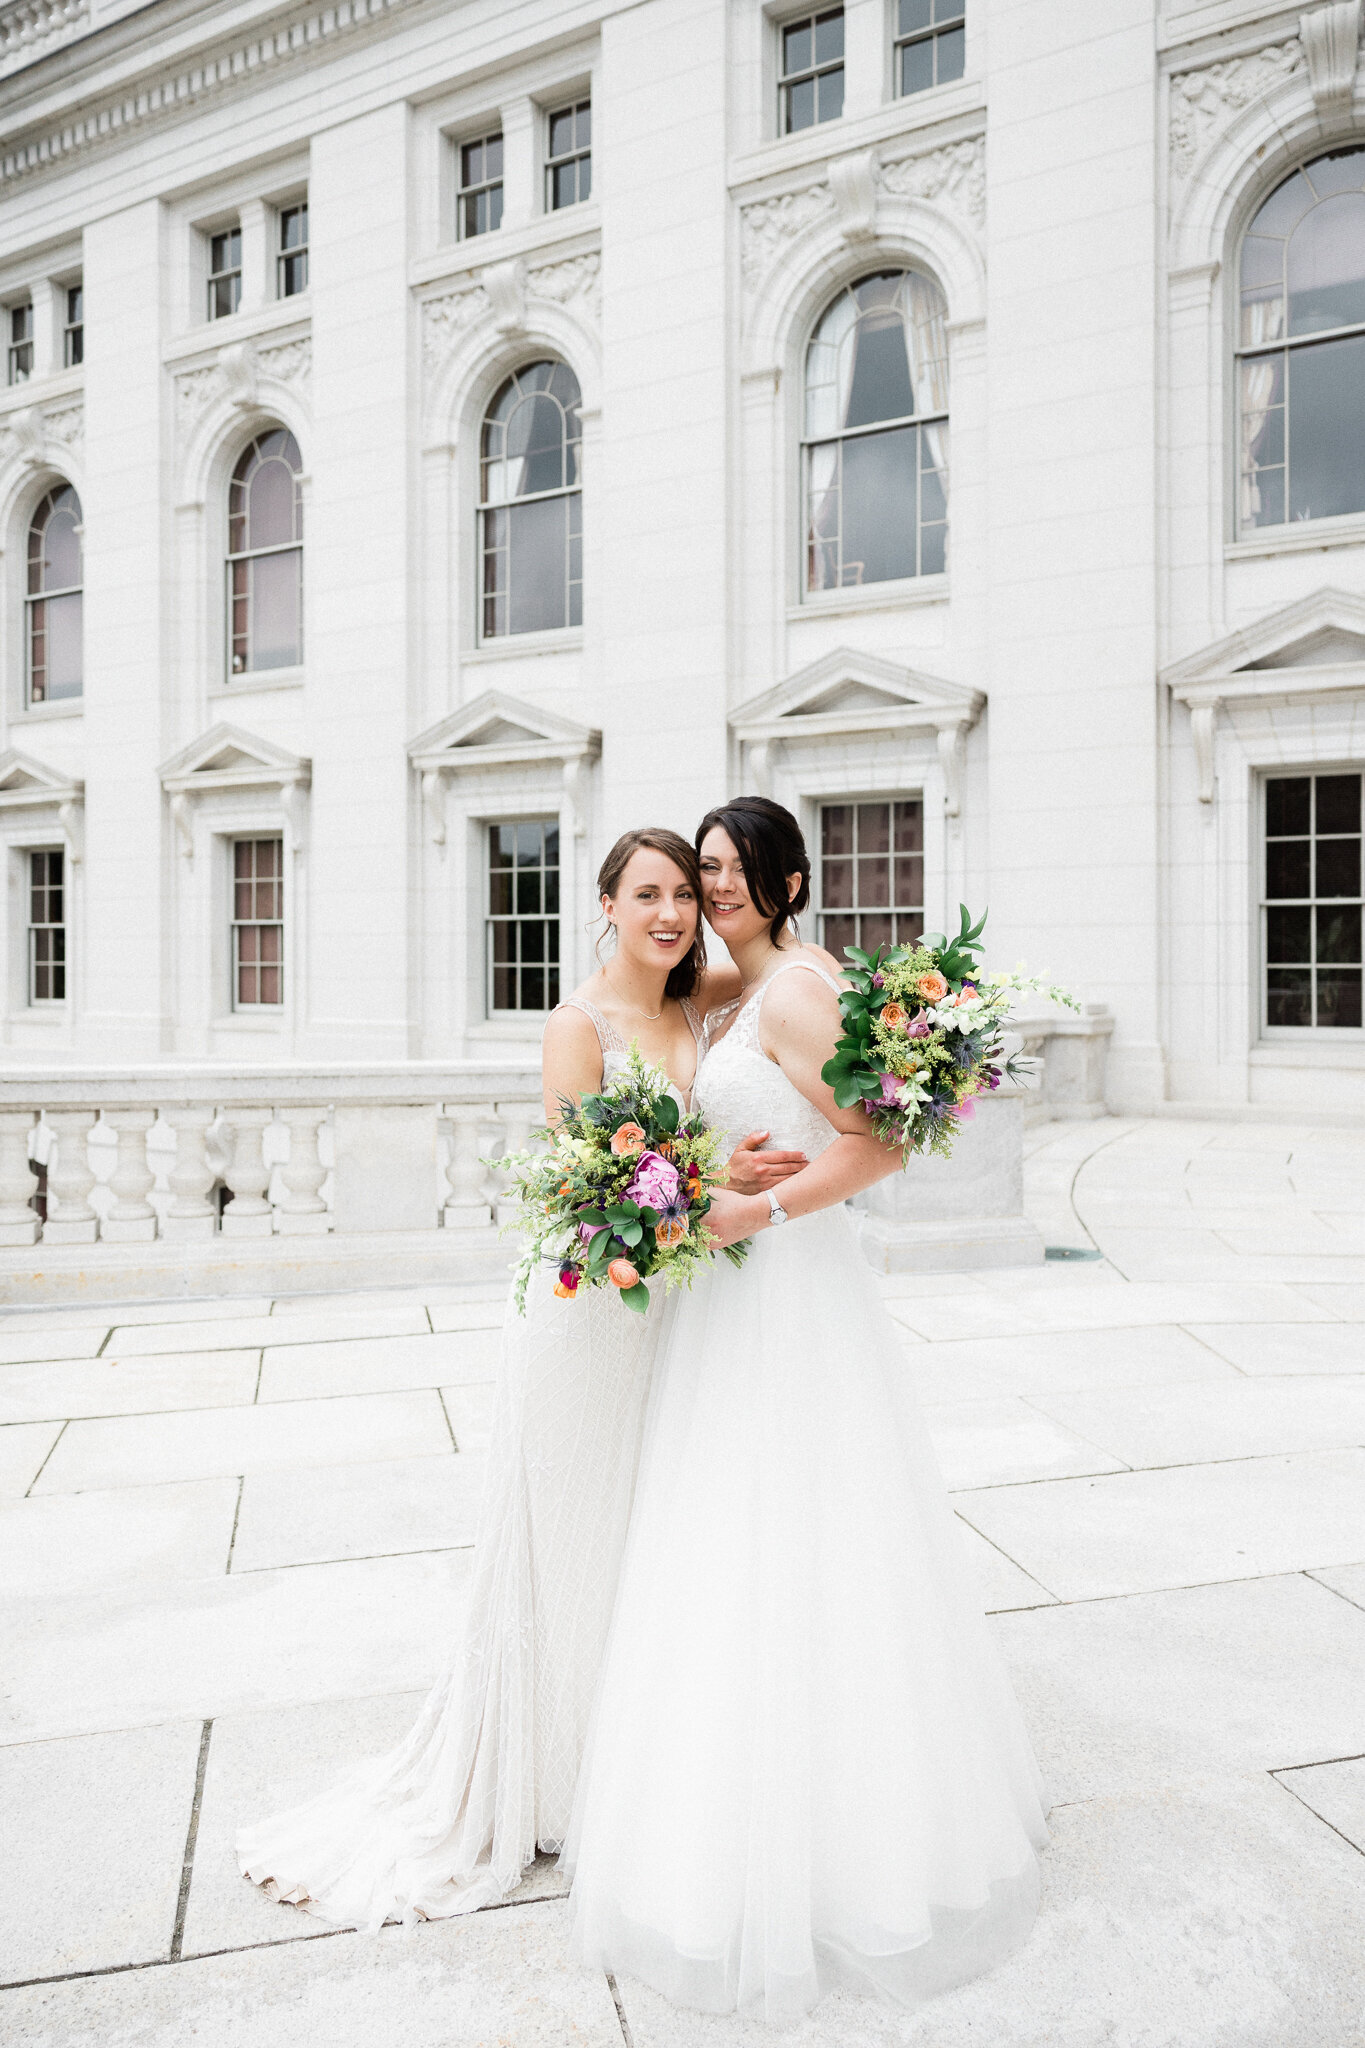 Natalea & Laura's Wedding - 6.11.2022 - Anna Katherine Photography (6 of 8)